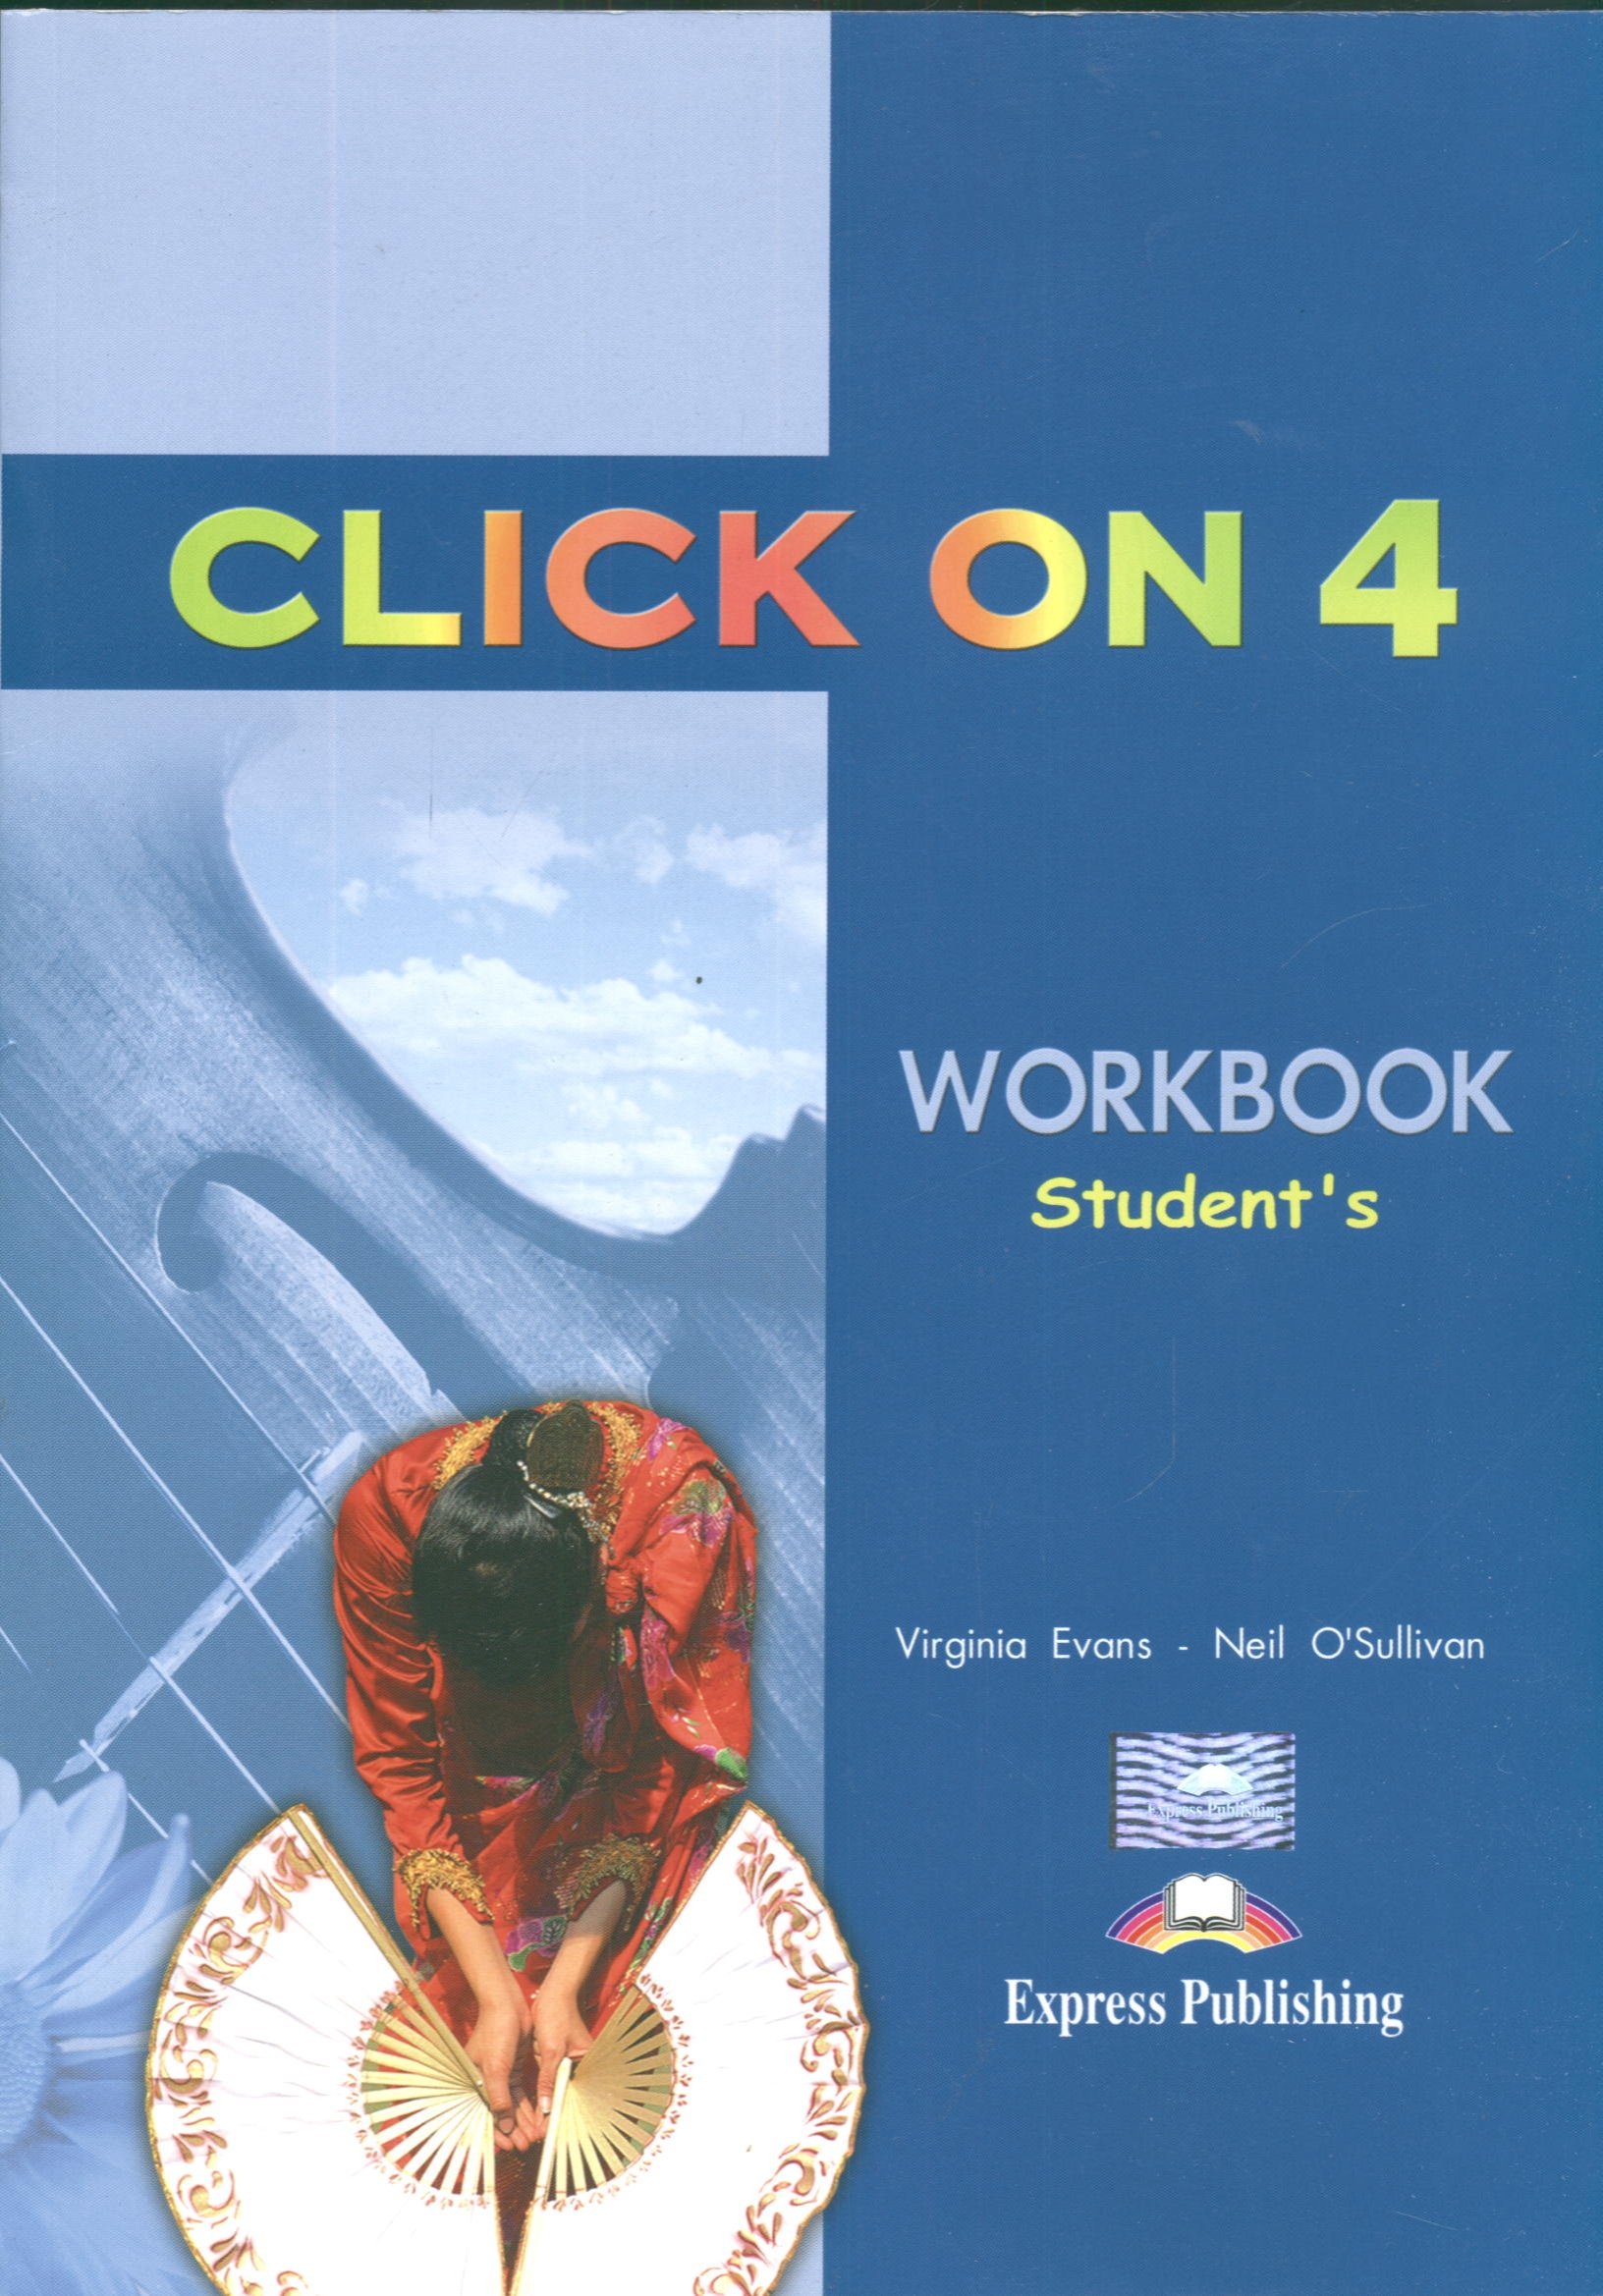 CLICK ON 4 Workbook (Student's)